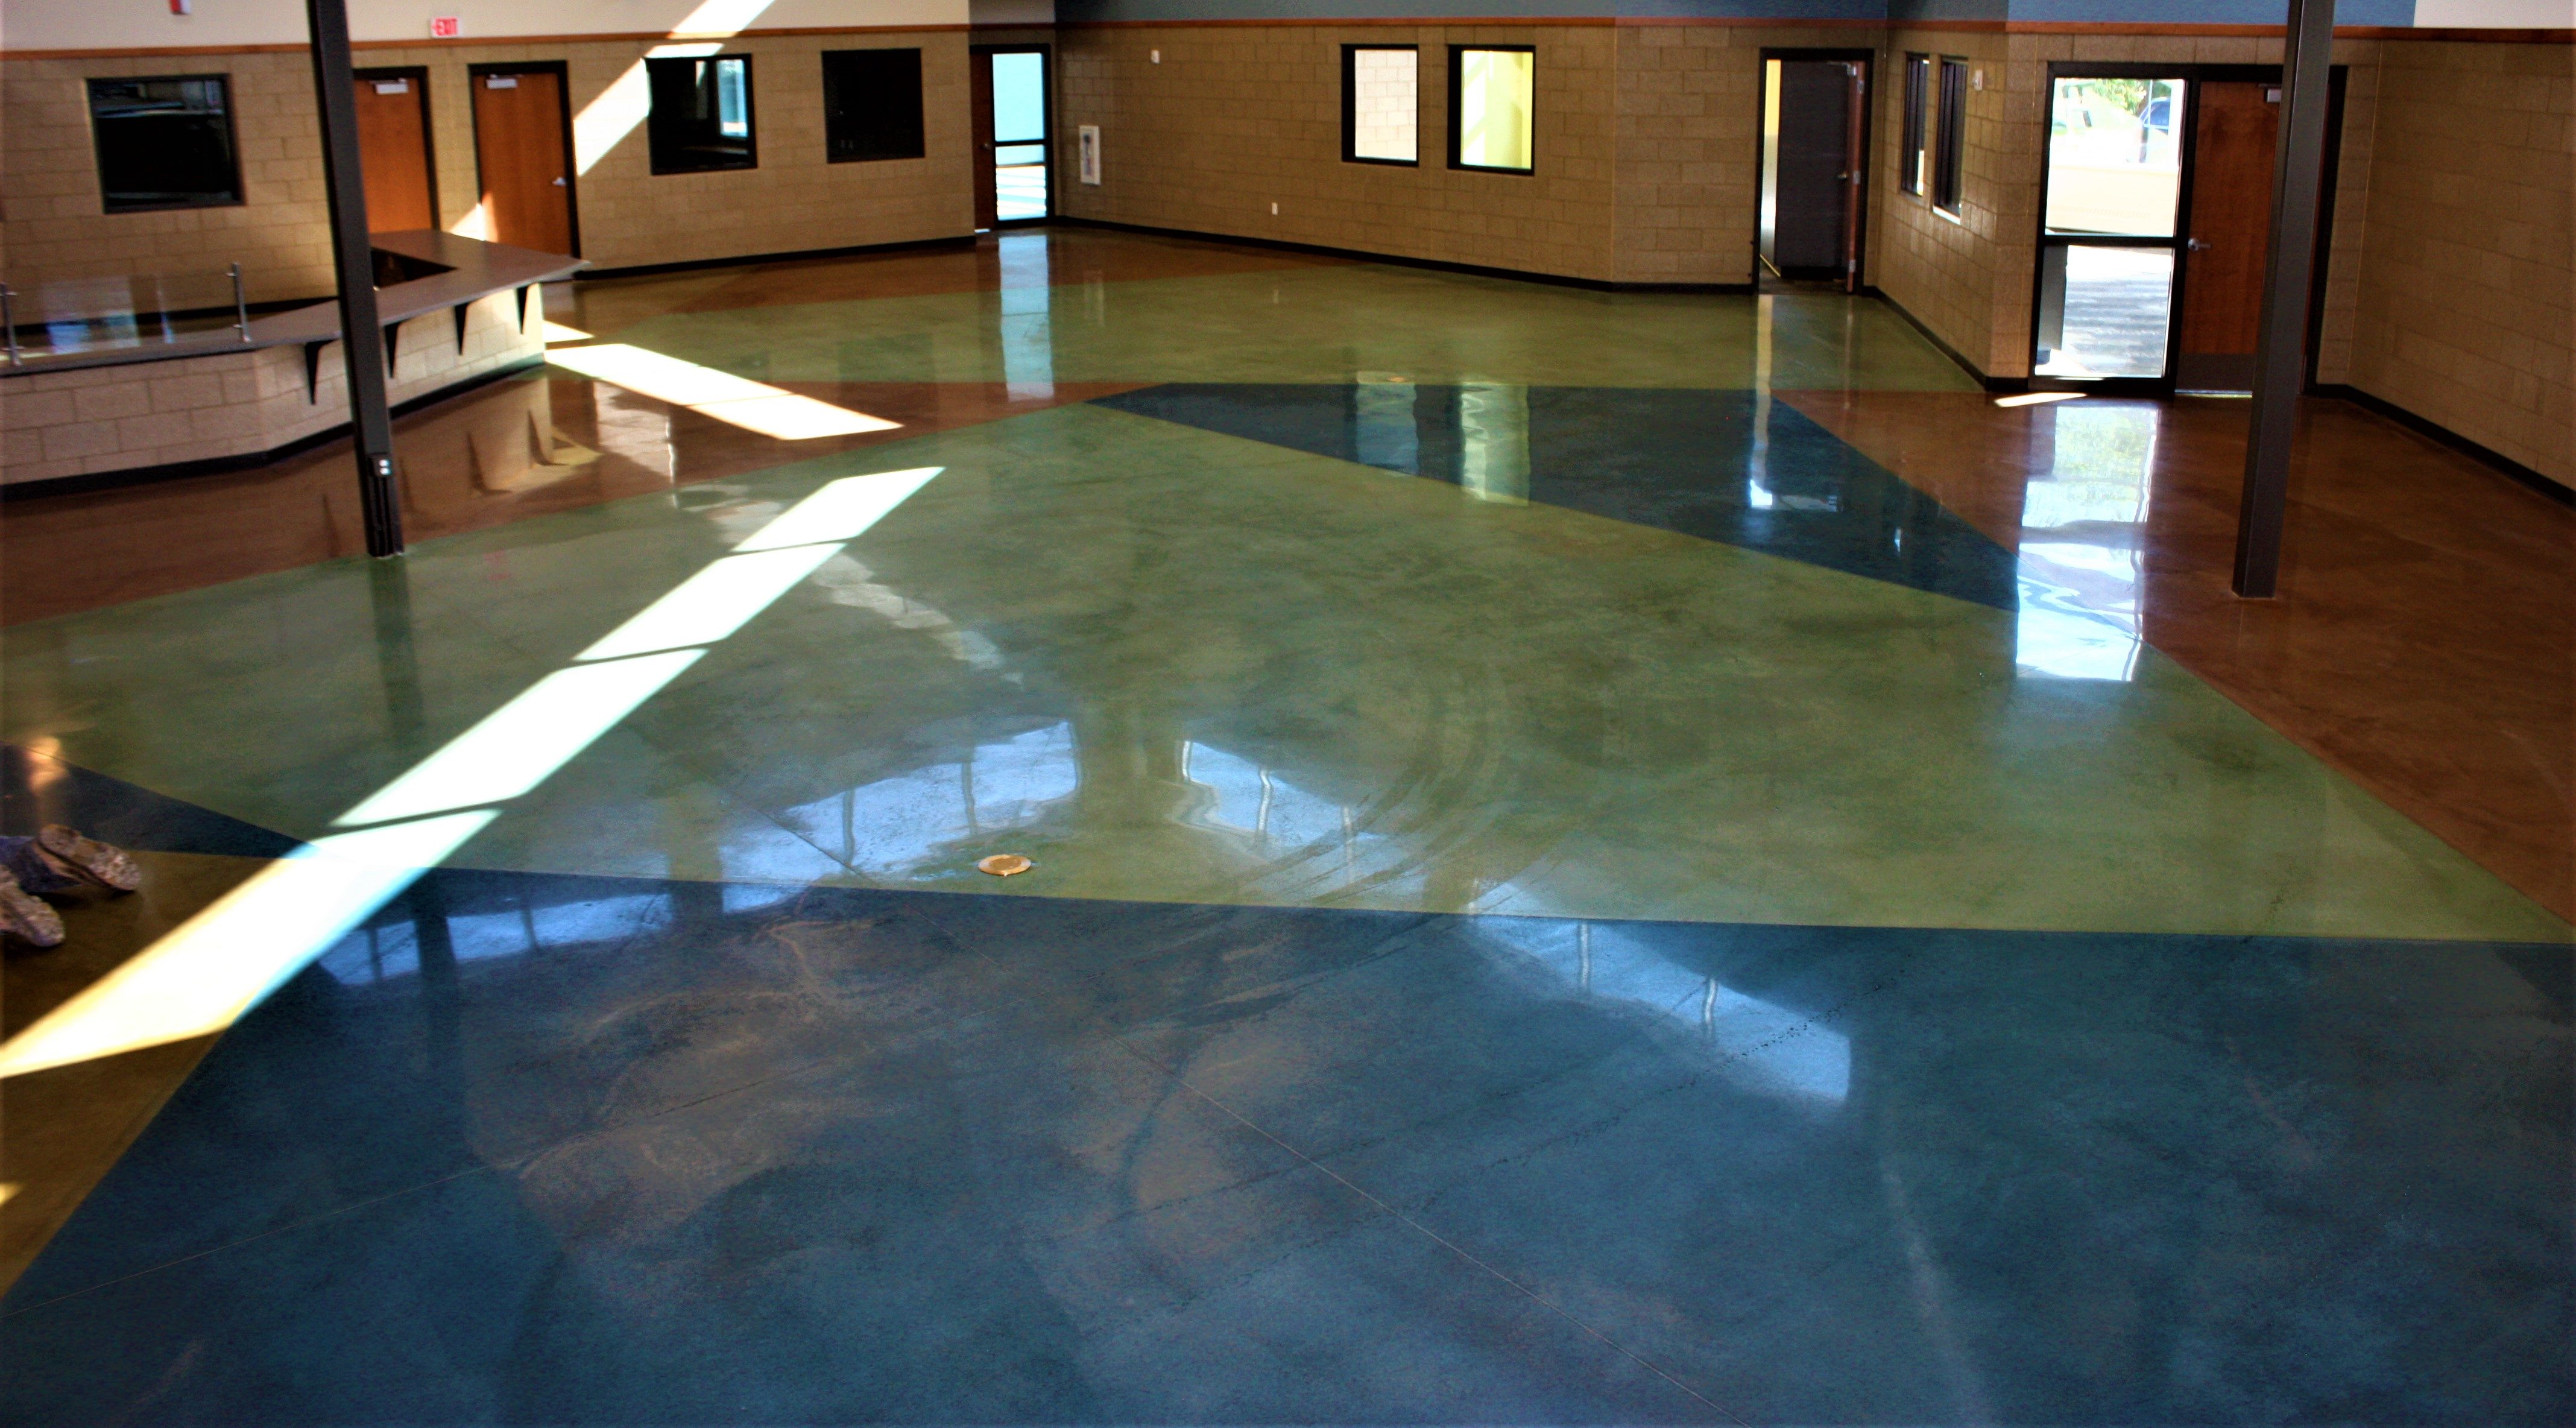 Lobby entryway flooring example